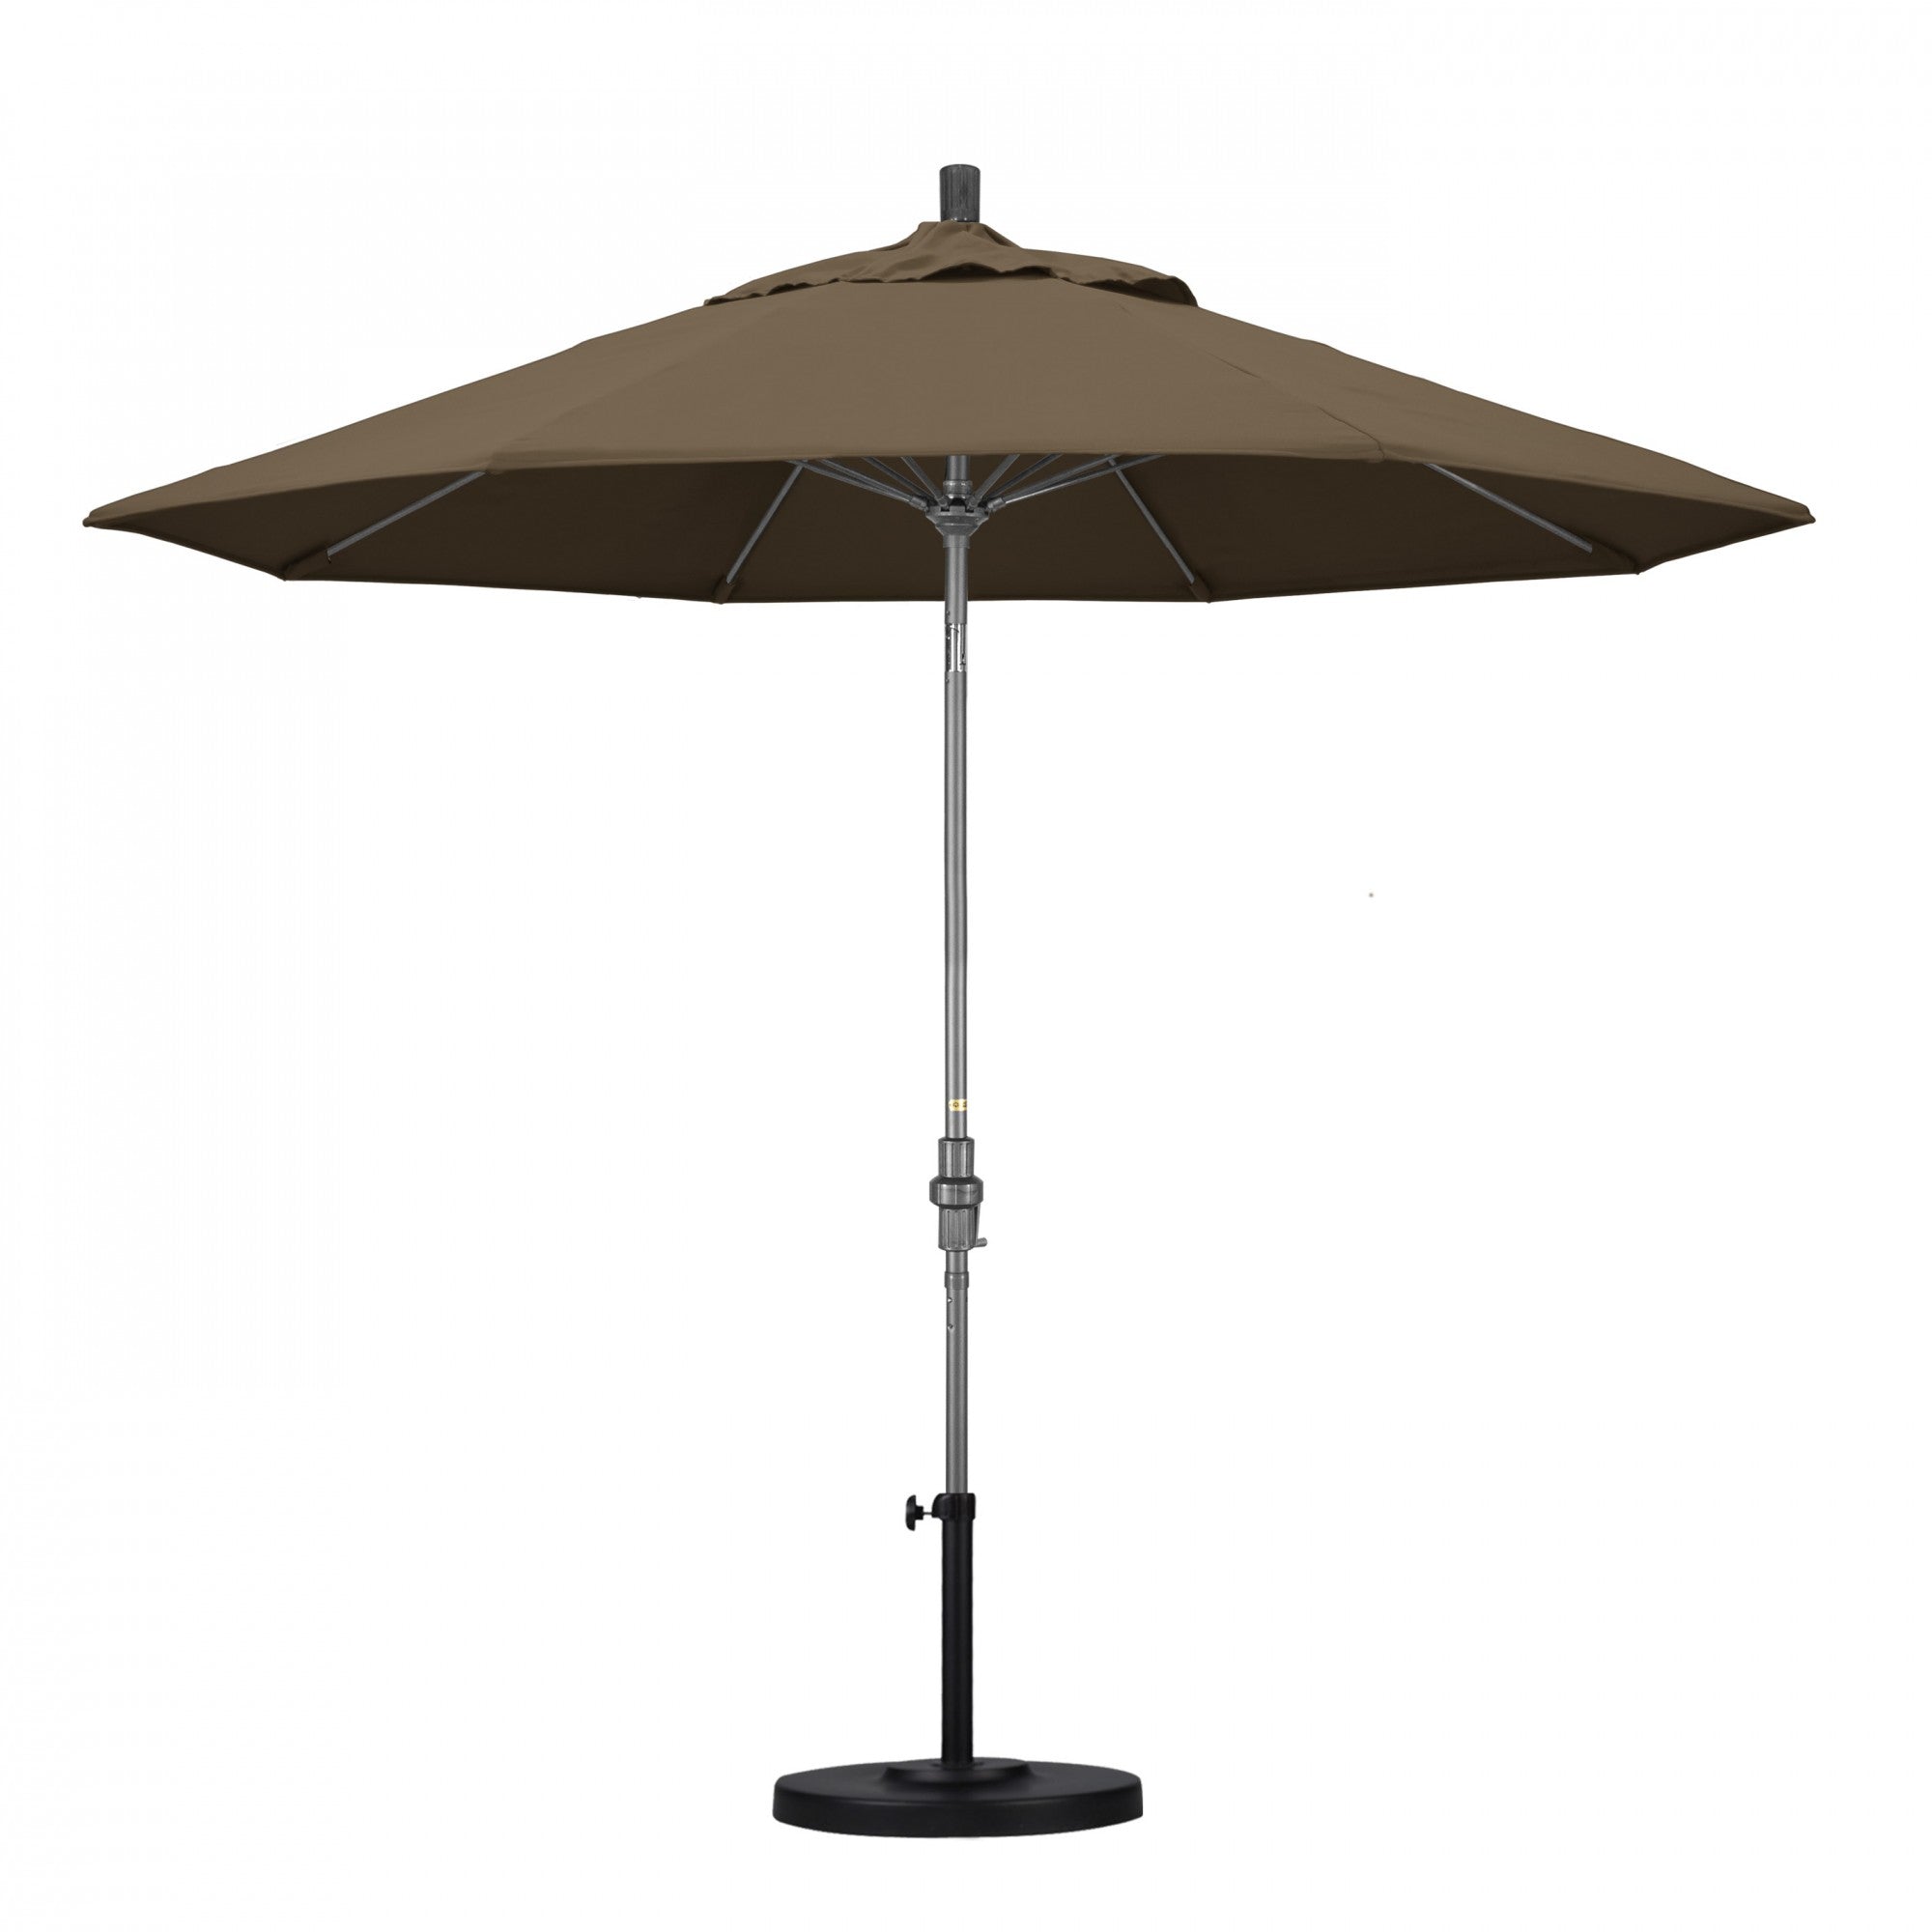 California Umbrella - 9' - Patio Umbrella Umbrella - Aluminum Pole - Cocoa - Sunbrella  - GSCUF908010-5425